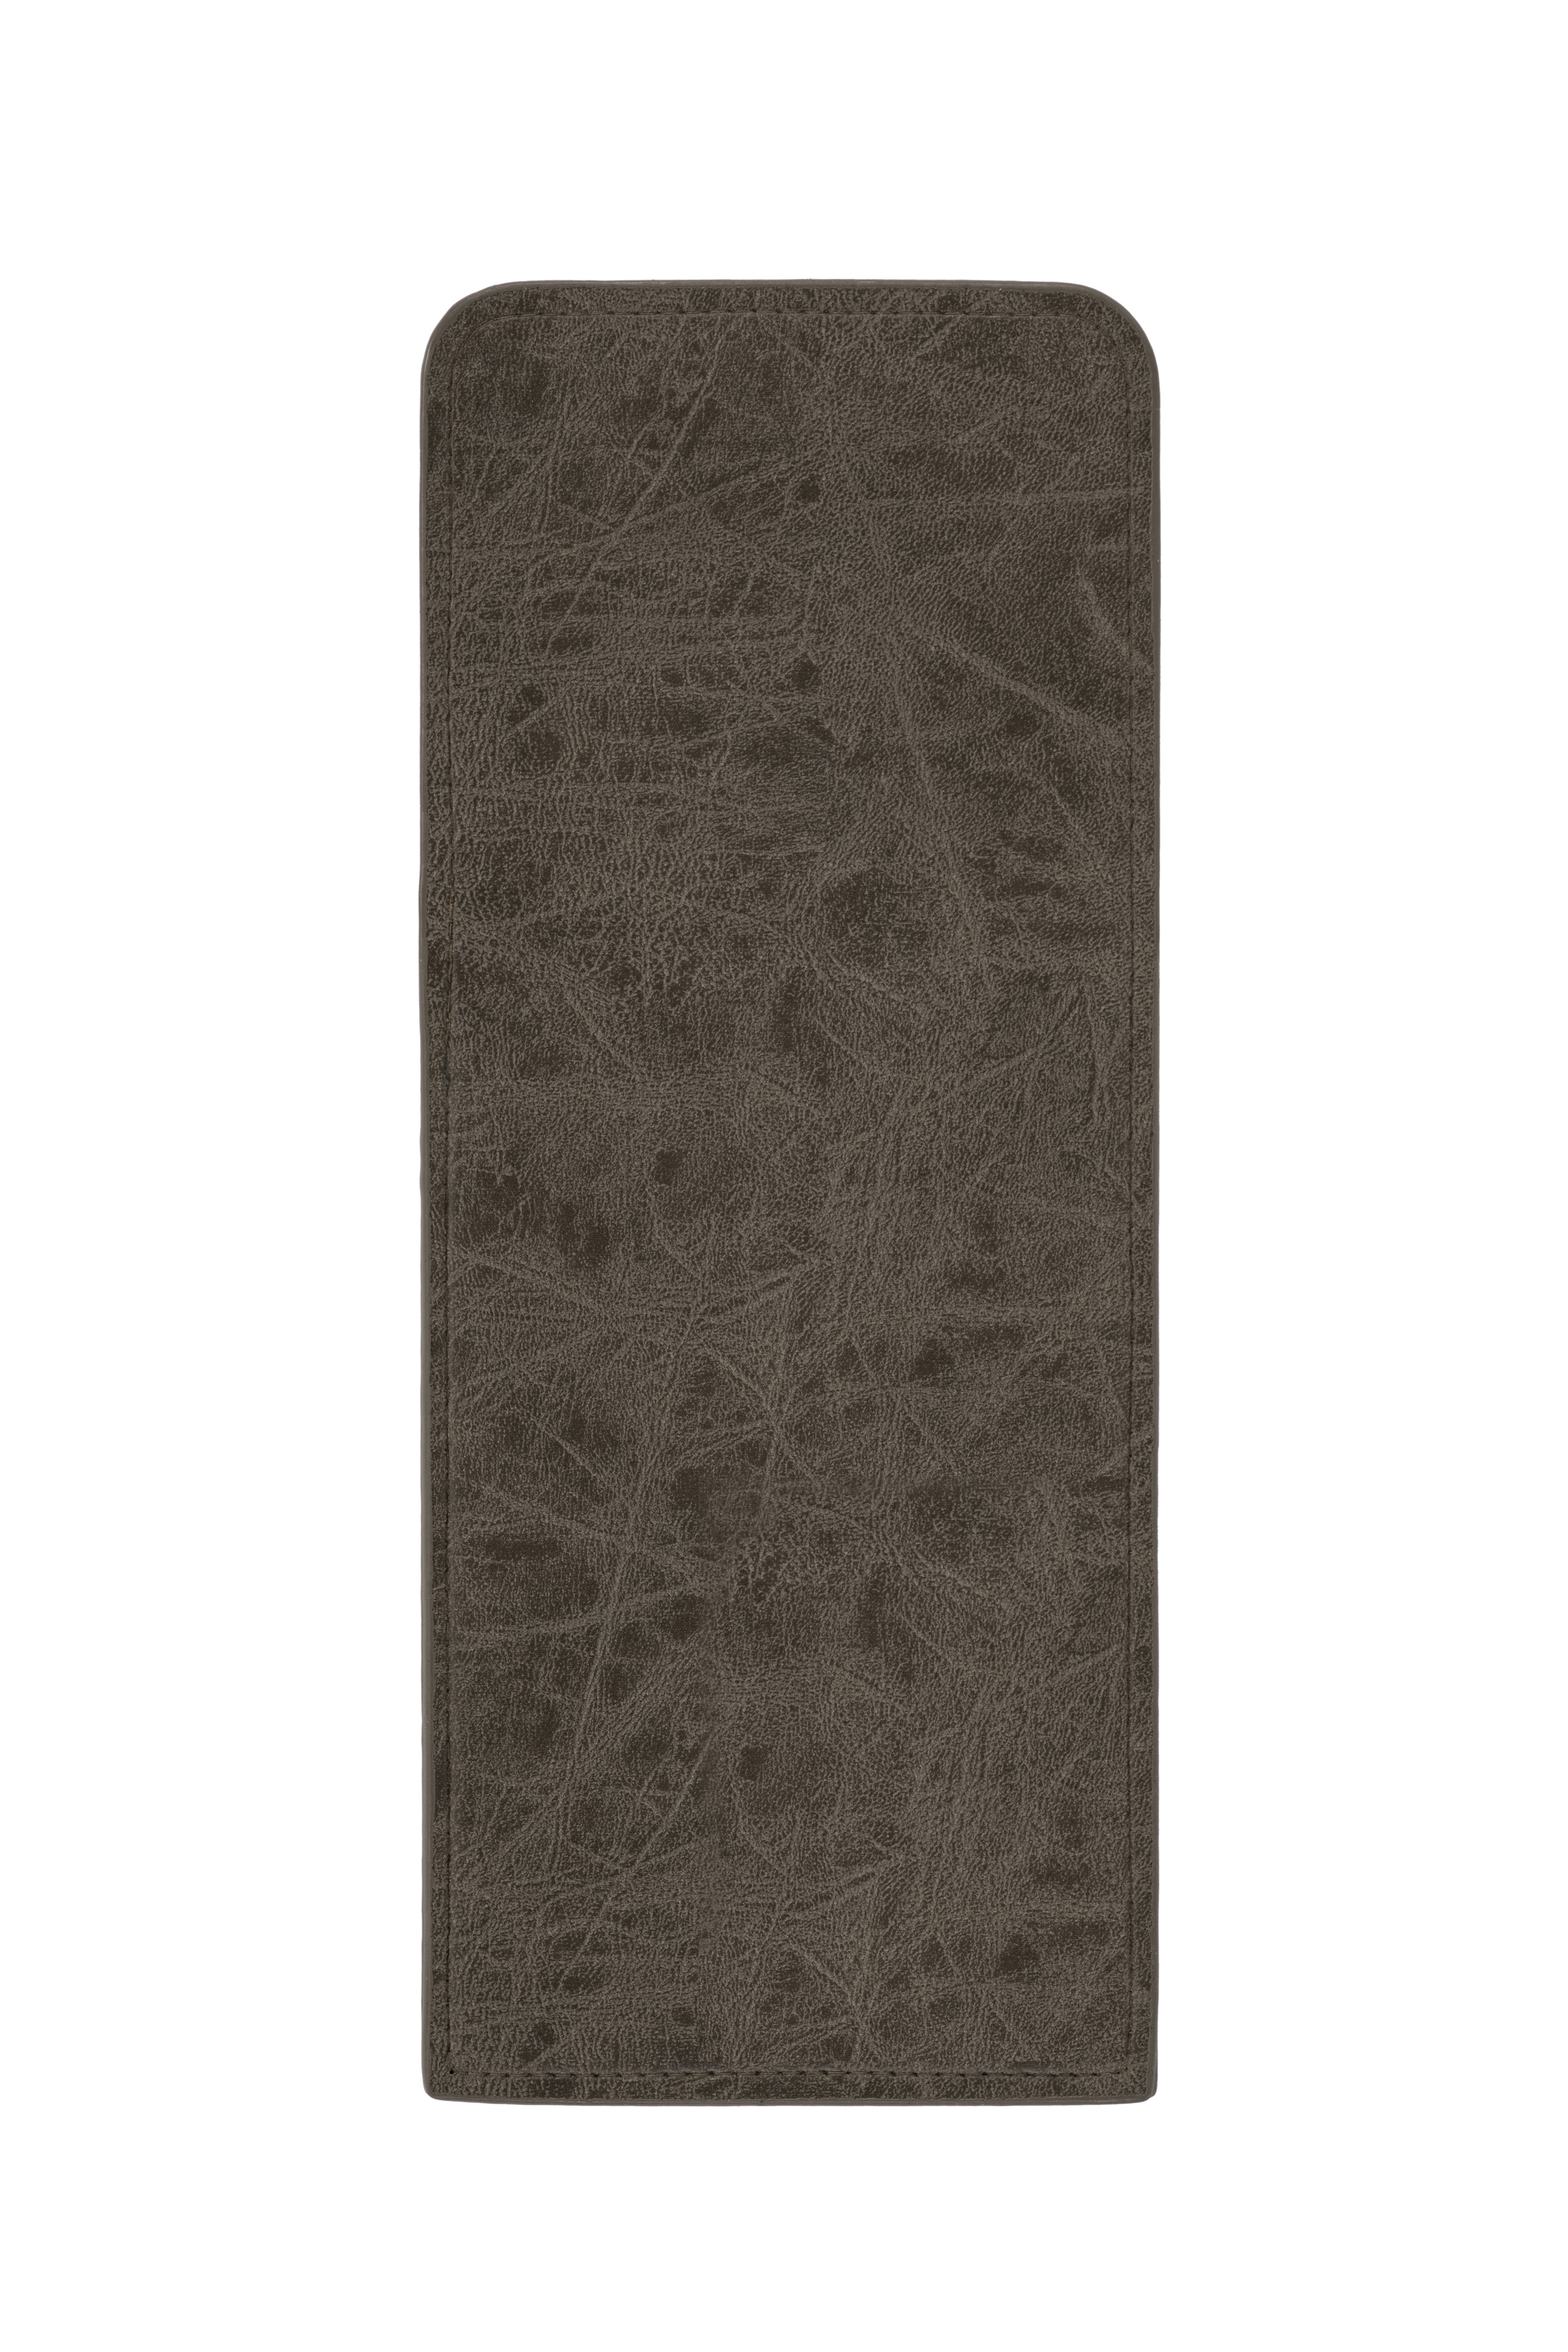 Bestekhouder TRUMAN, 25 x 10 cm, charcoal